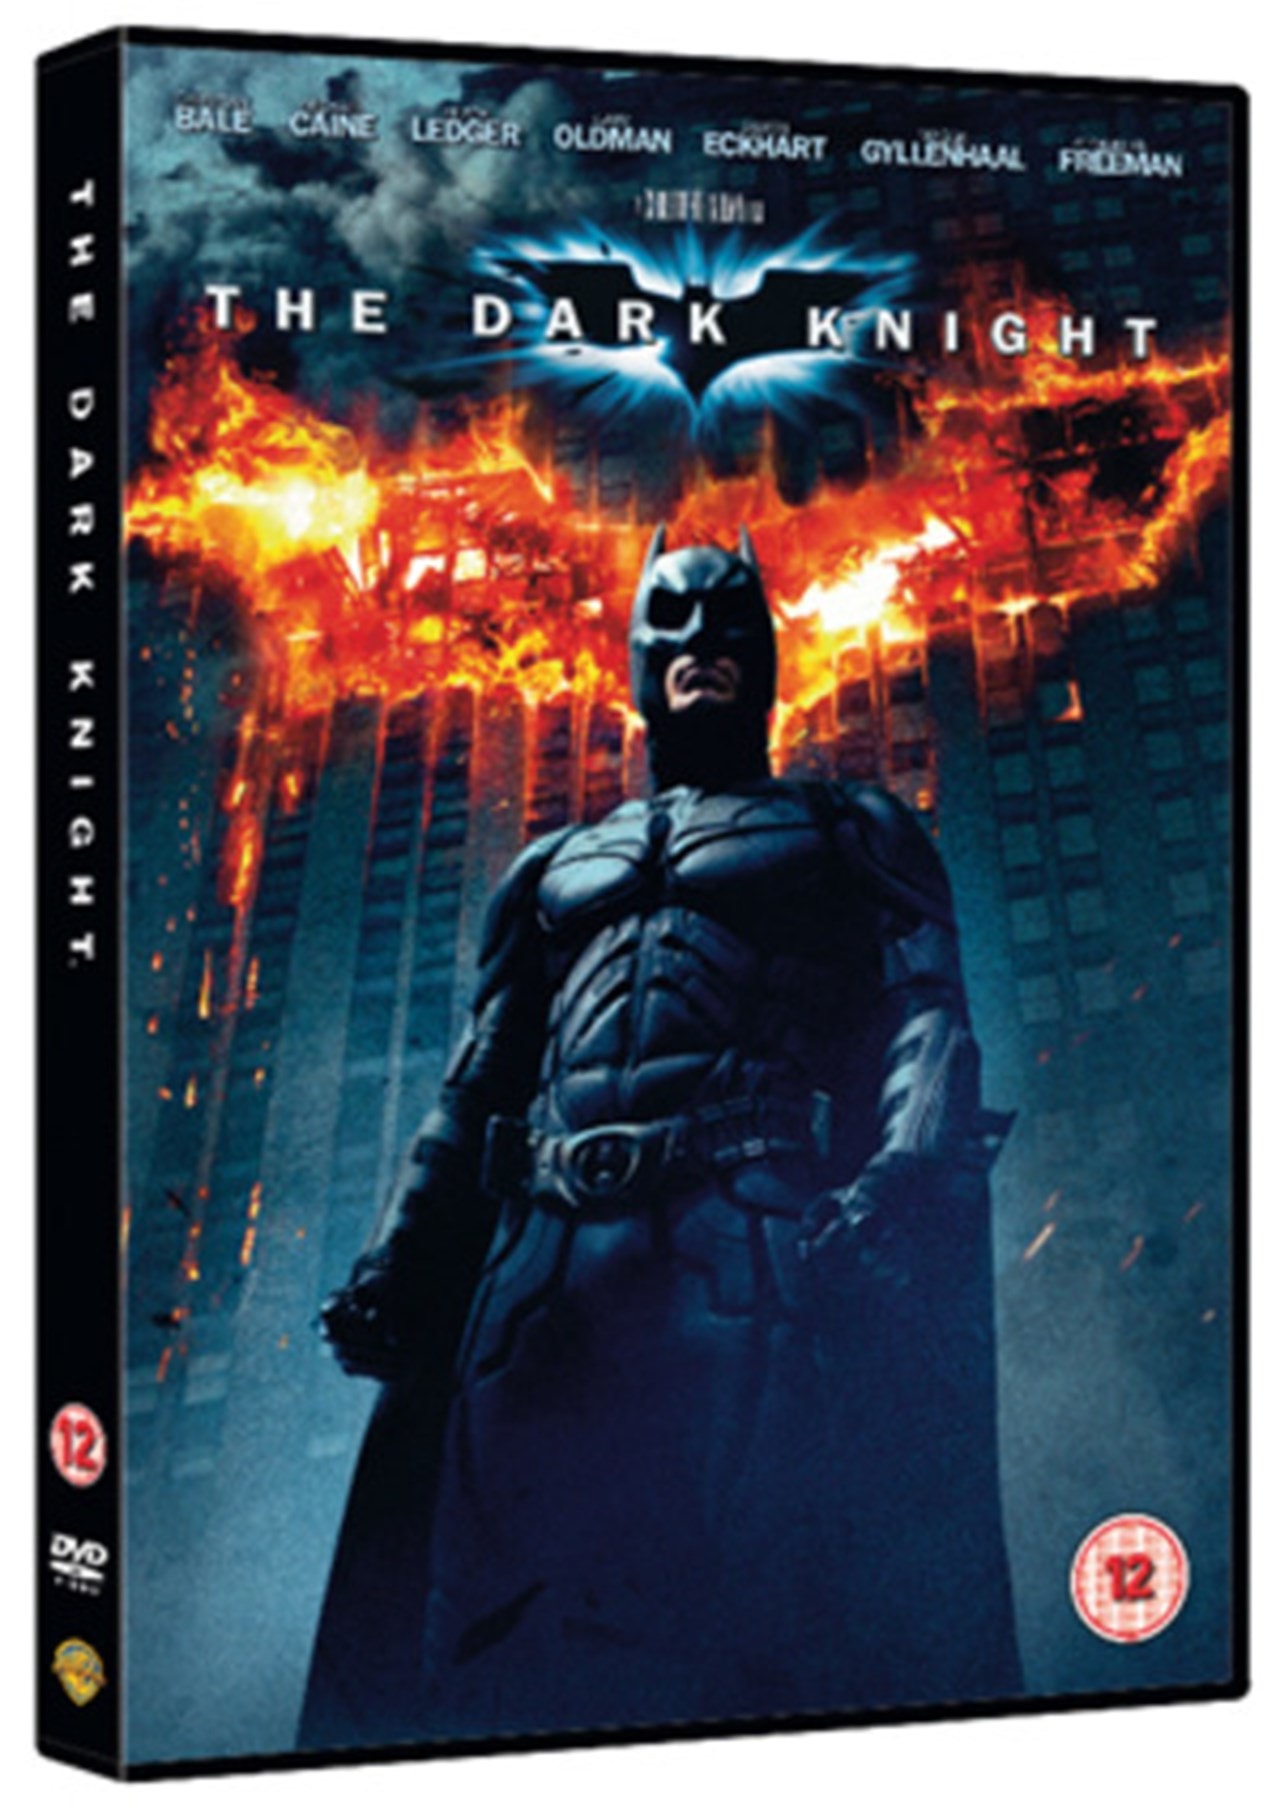  The Dark  Knight  DVD Free shipping over 20 HMV Store